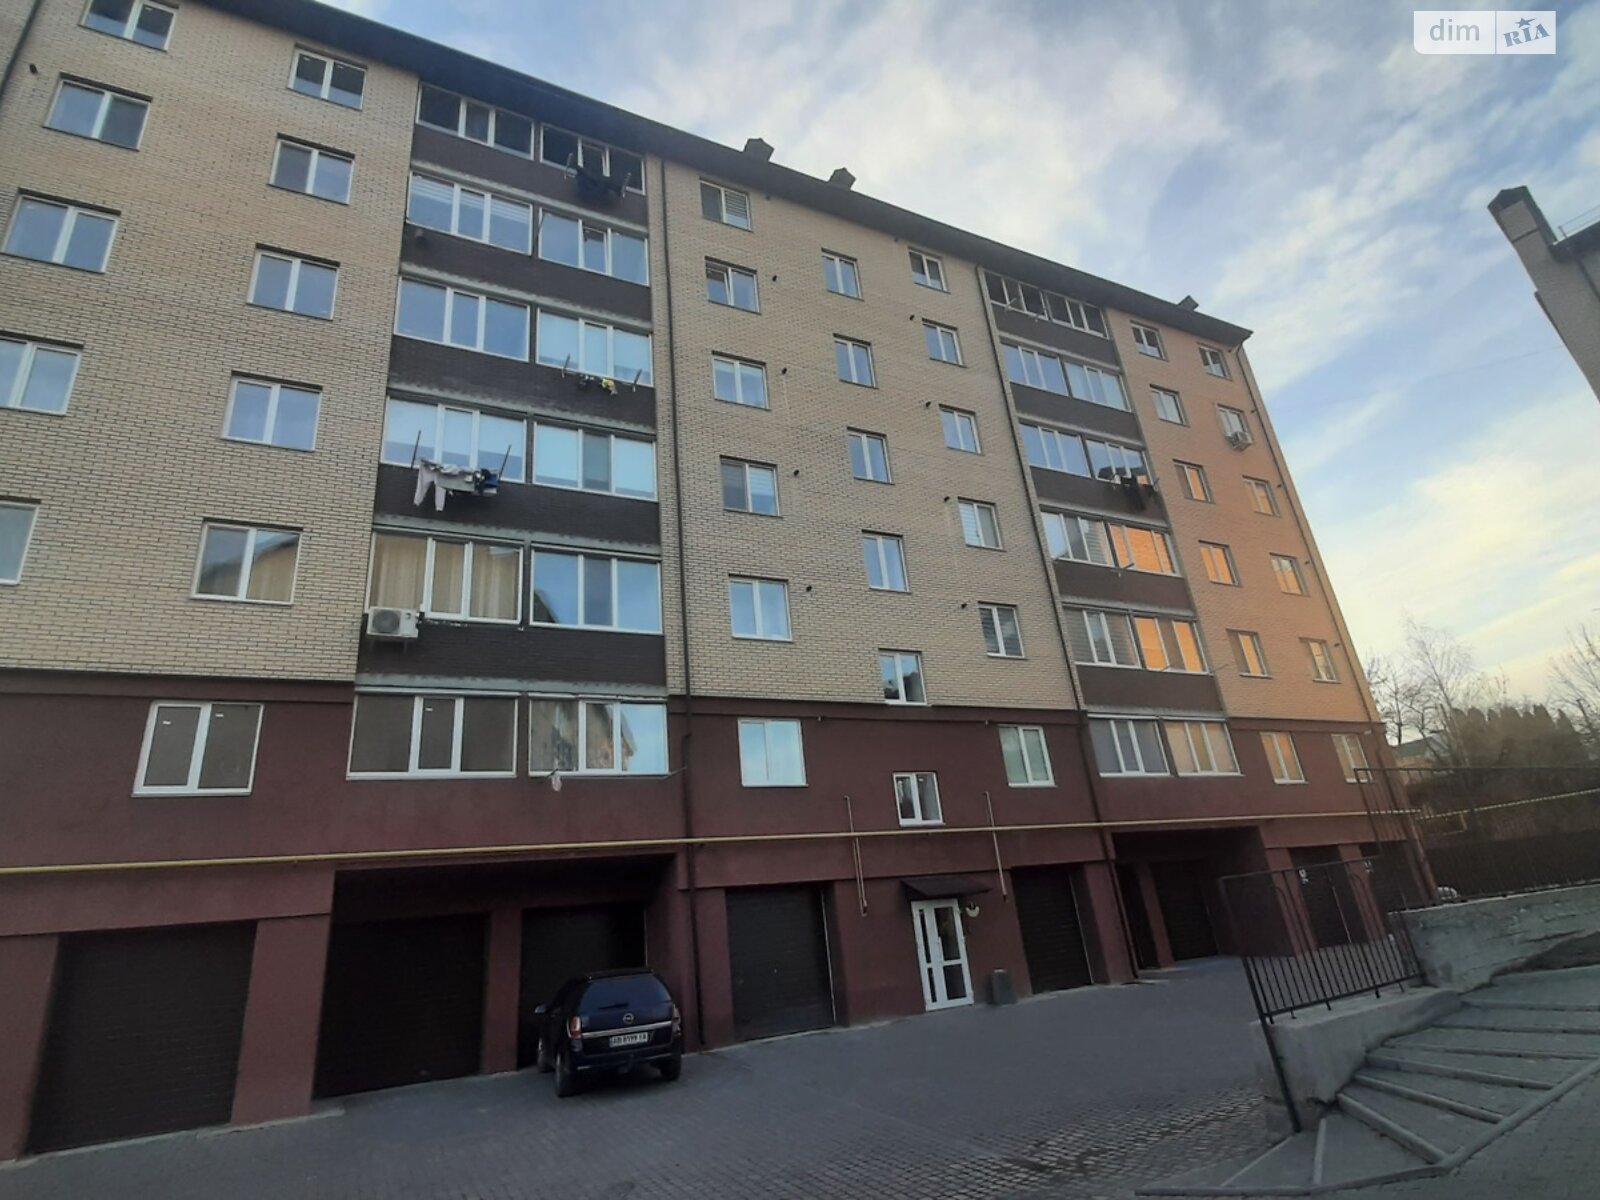 Продажа двухкомнатной квартиры в Стрижавке, на ул. Аллеи, фото 1